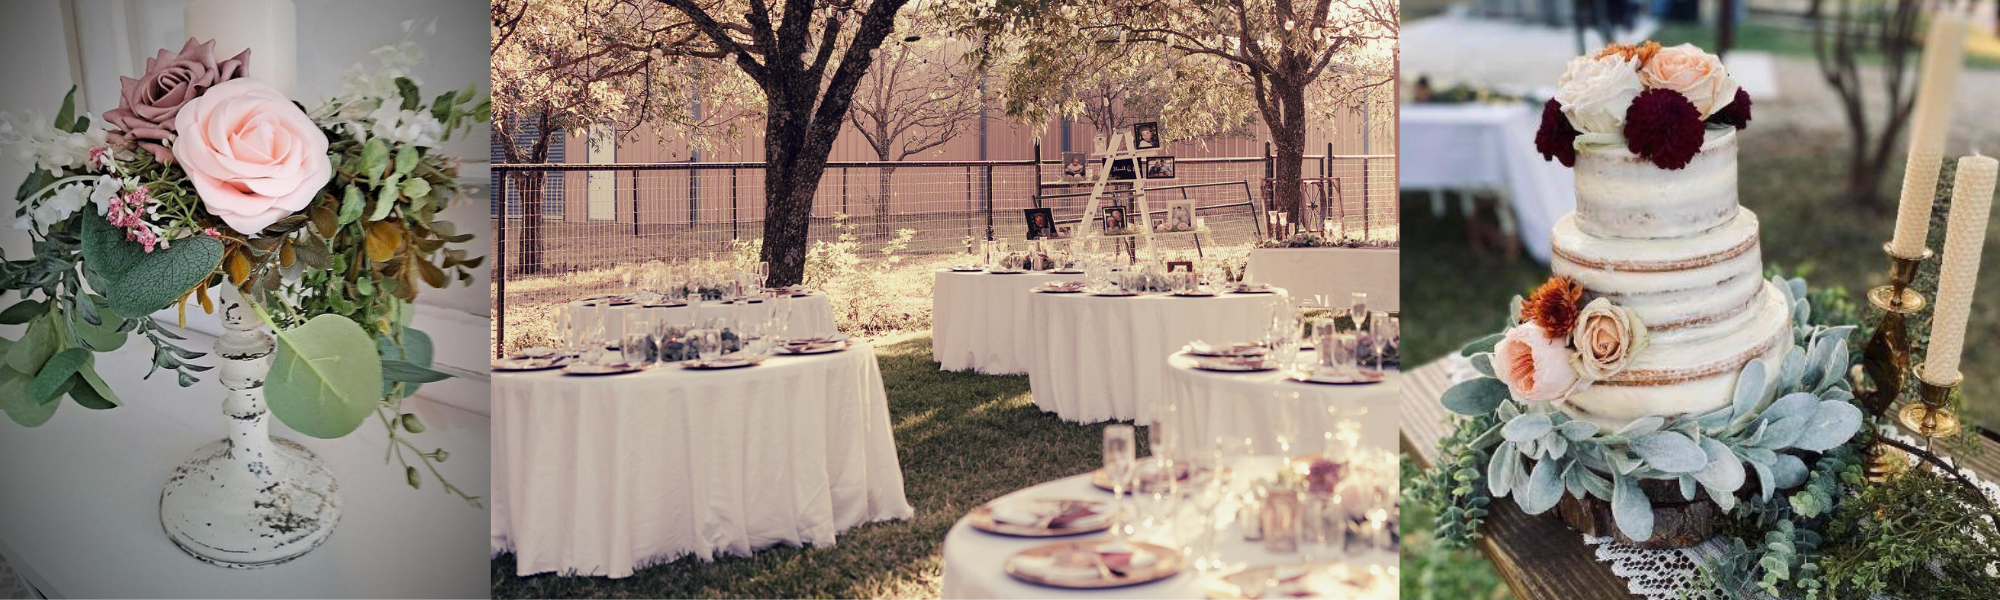 elegant florals, wedding reception tables and a beautiful wedding cake 